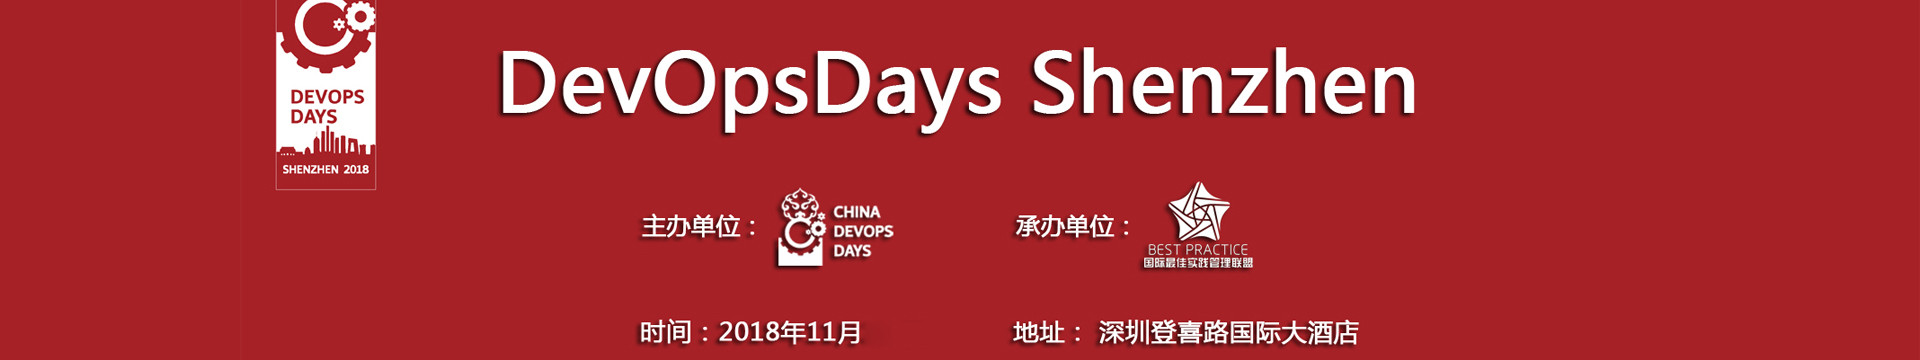 DevOpsDays Shenzhen 2018